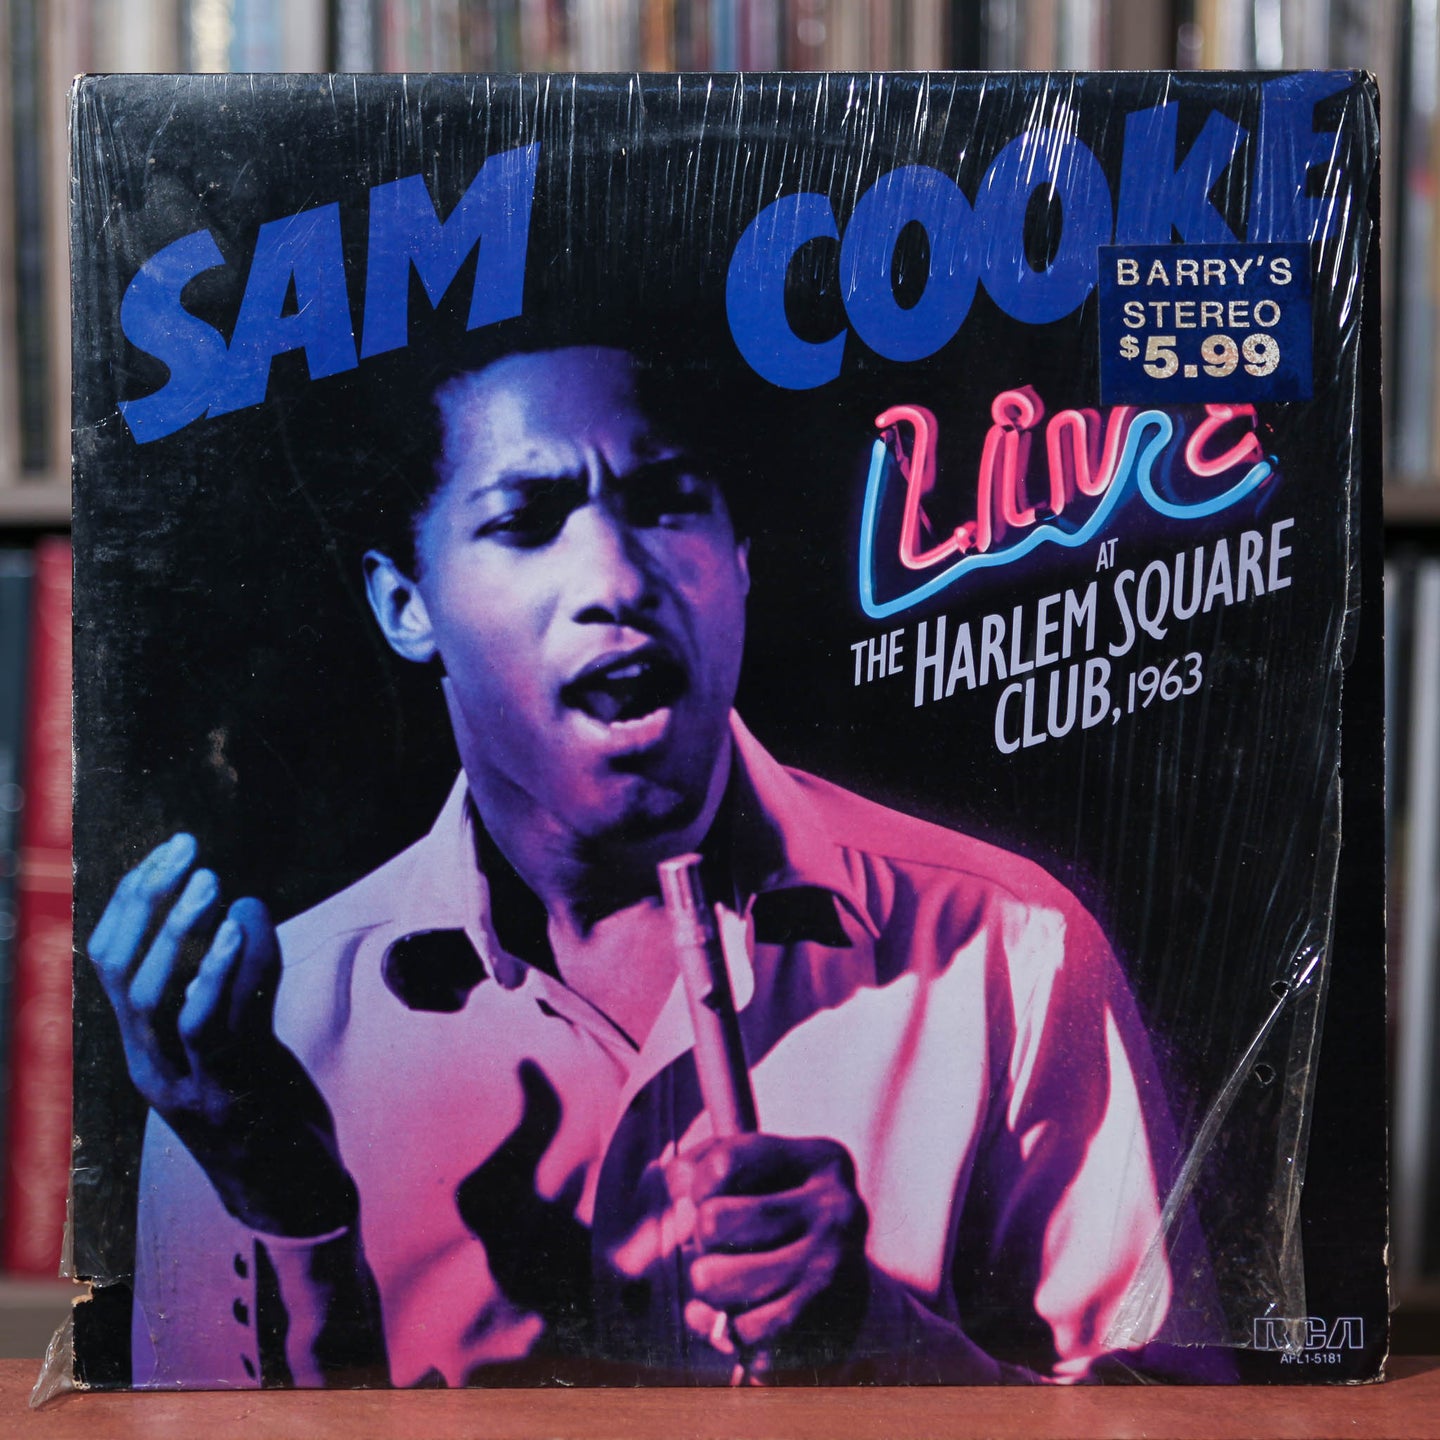 Sam Cooke - Live At The Harlem Square Club, 1963 - 1985 RCA, VG+/EX w/